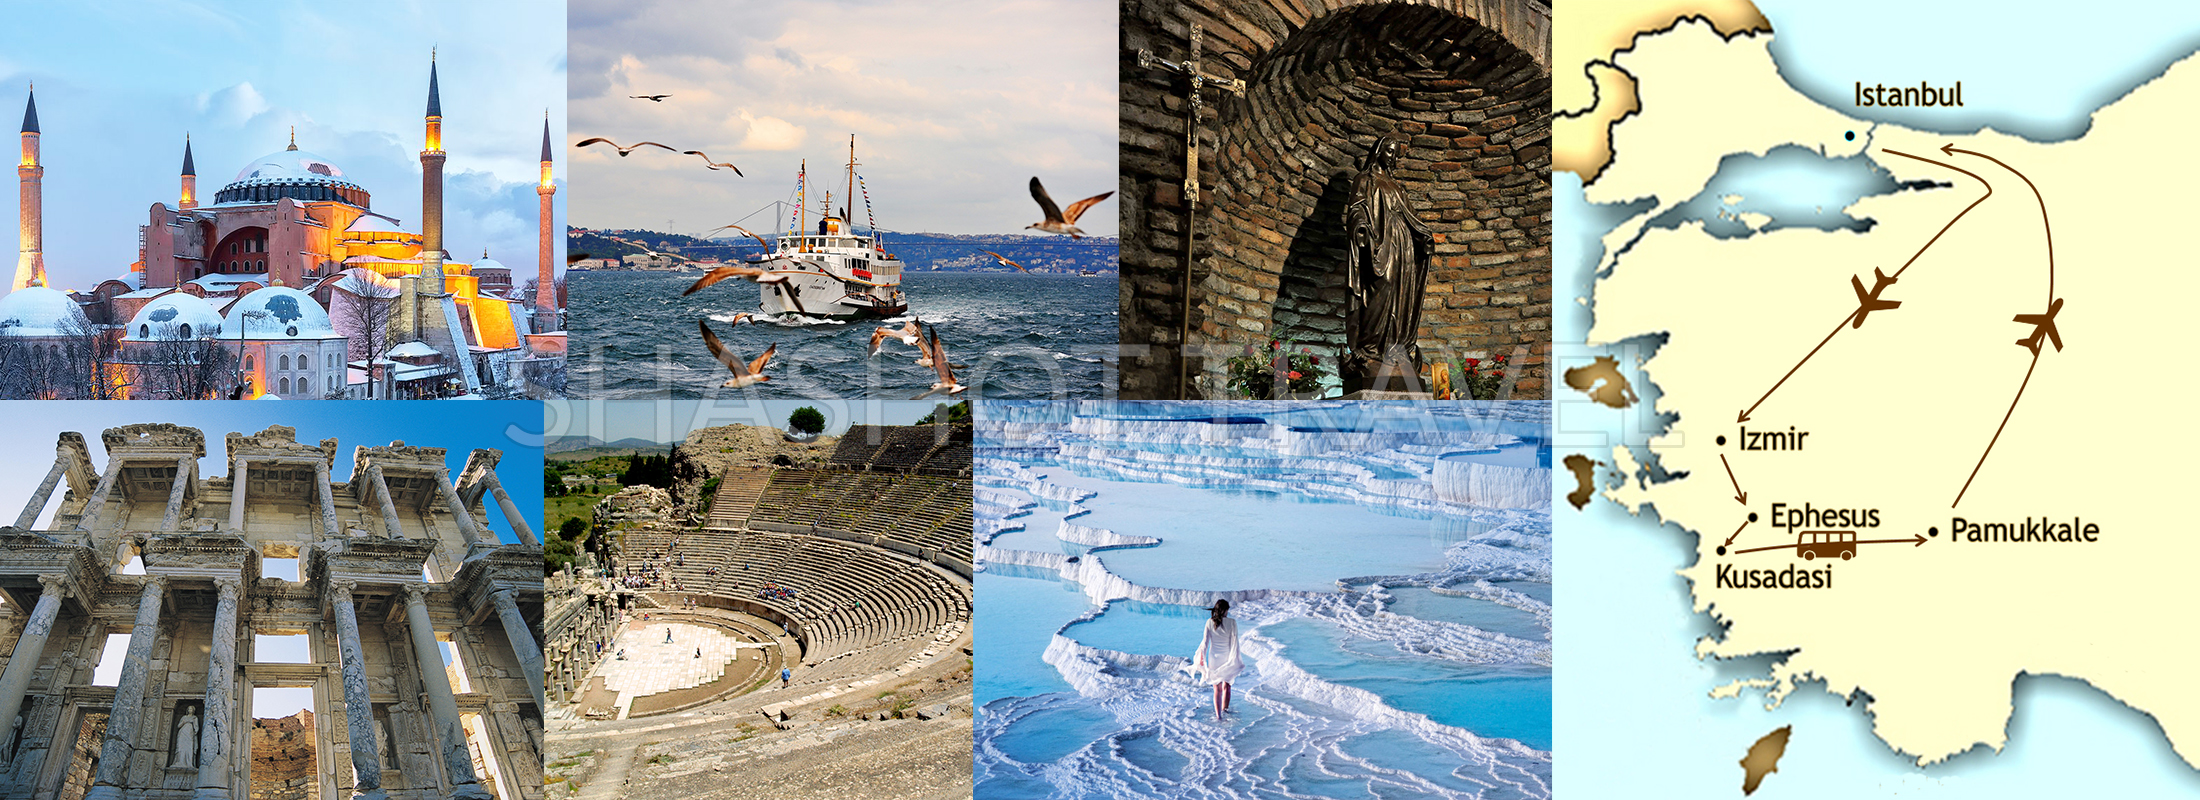 6-DAYS-TURKEY-PACKAGE-TOUR-ISTANBUL-EPHESUS-PAMUKKALE-by-flight-shashot-travel-turkiye-map